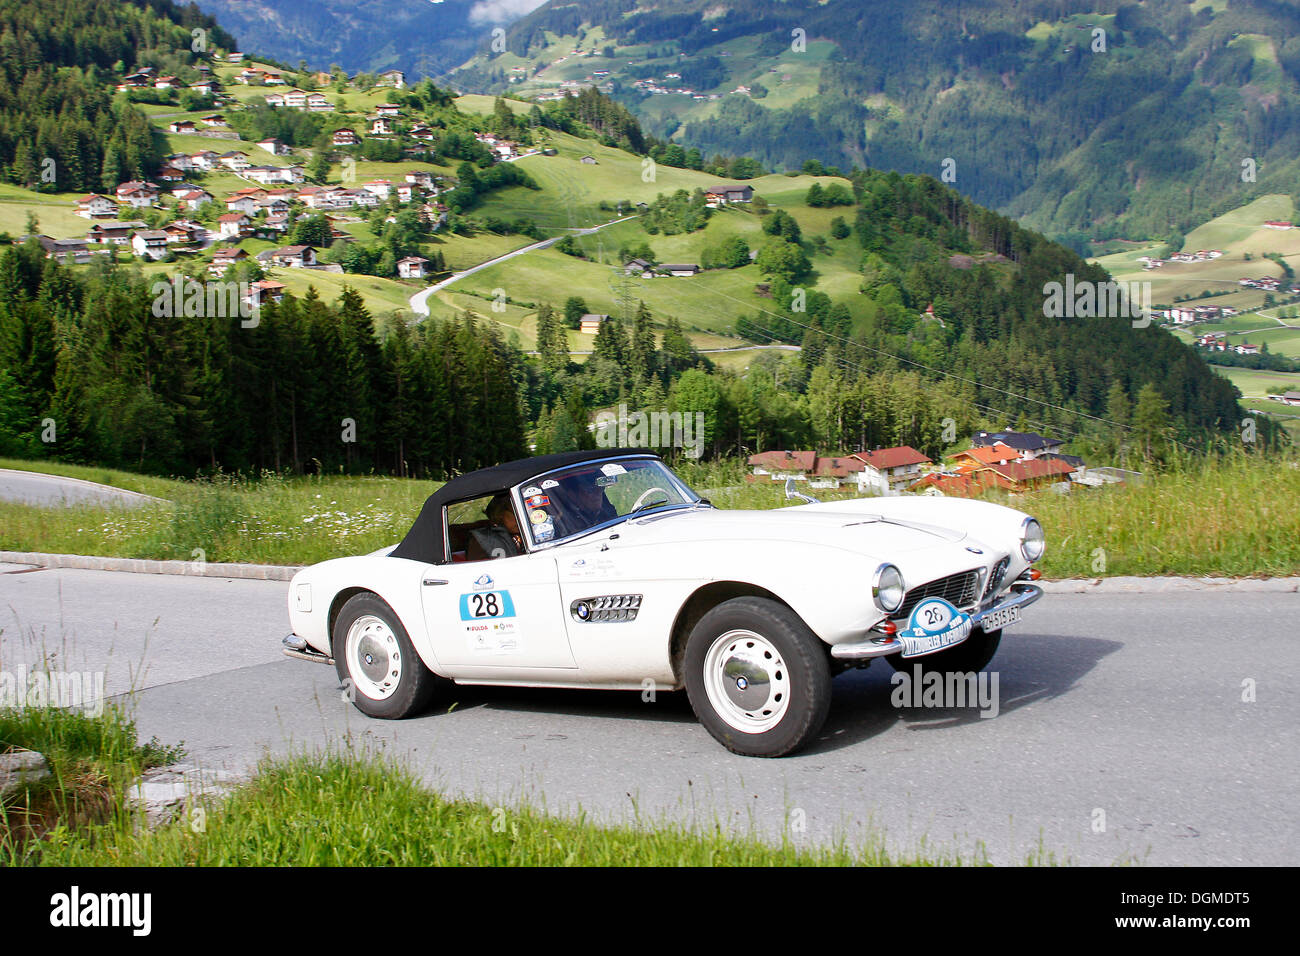 BMW 507, built in 1959, driven by Thomas Haffa, Kitzbuehel Alpine Rally 2010, Tyrol, Austria, Europe Stock Photo